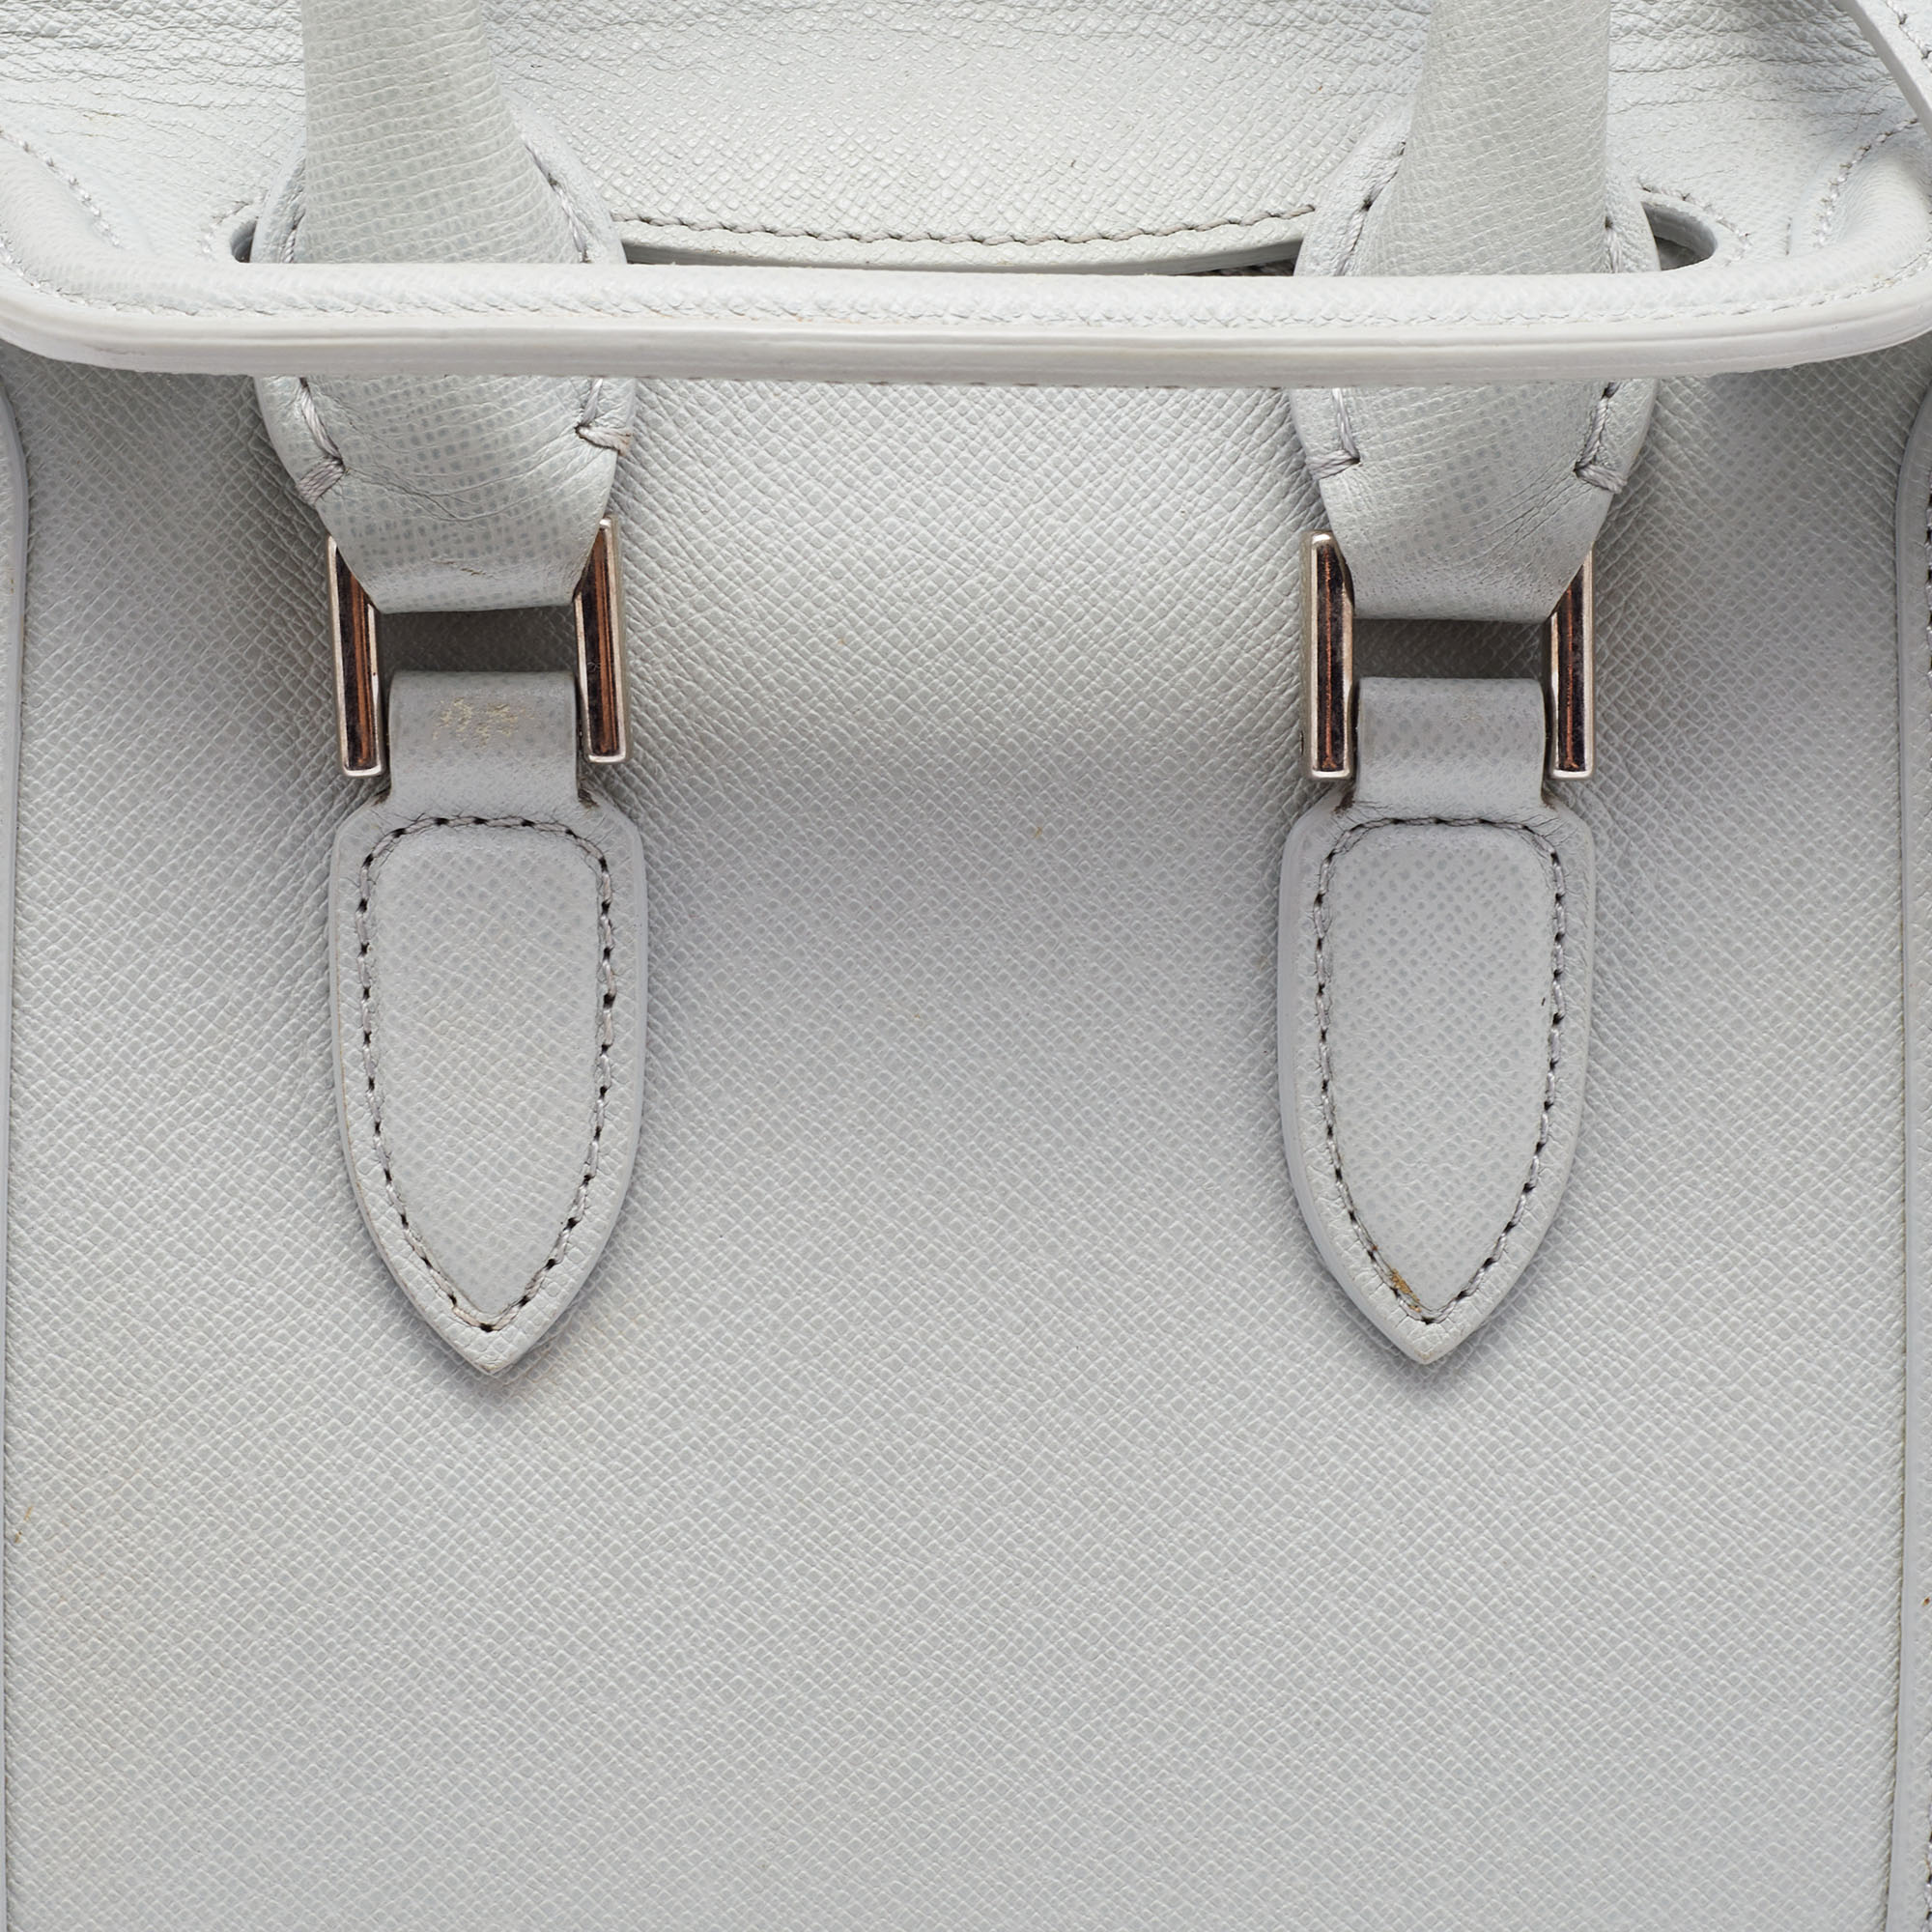 Alexander McQueen Grey Leather Mini Heroine Bag